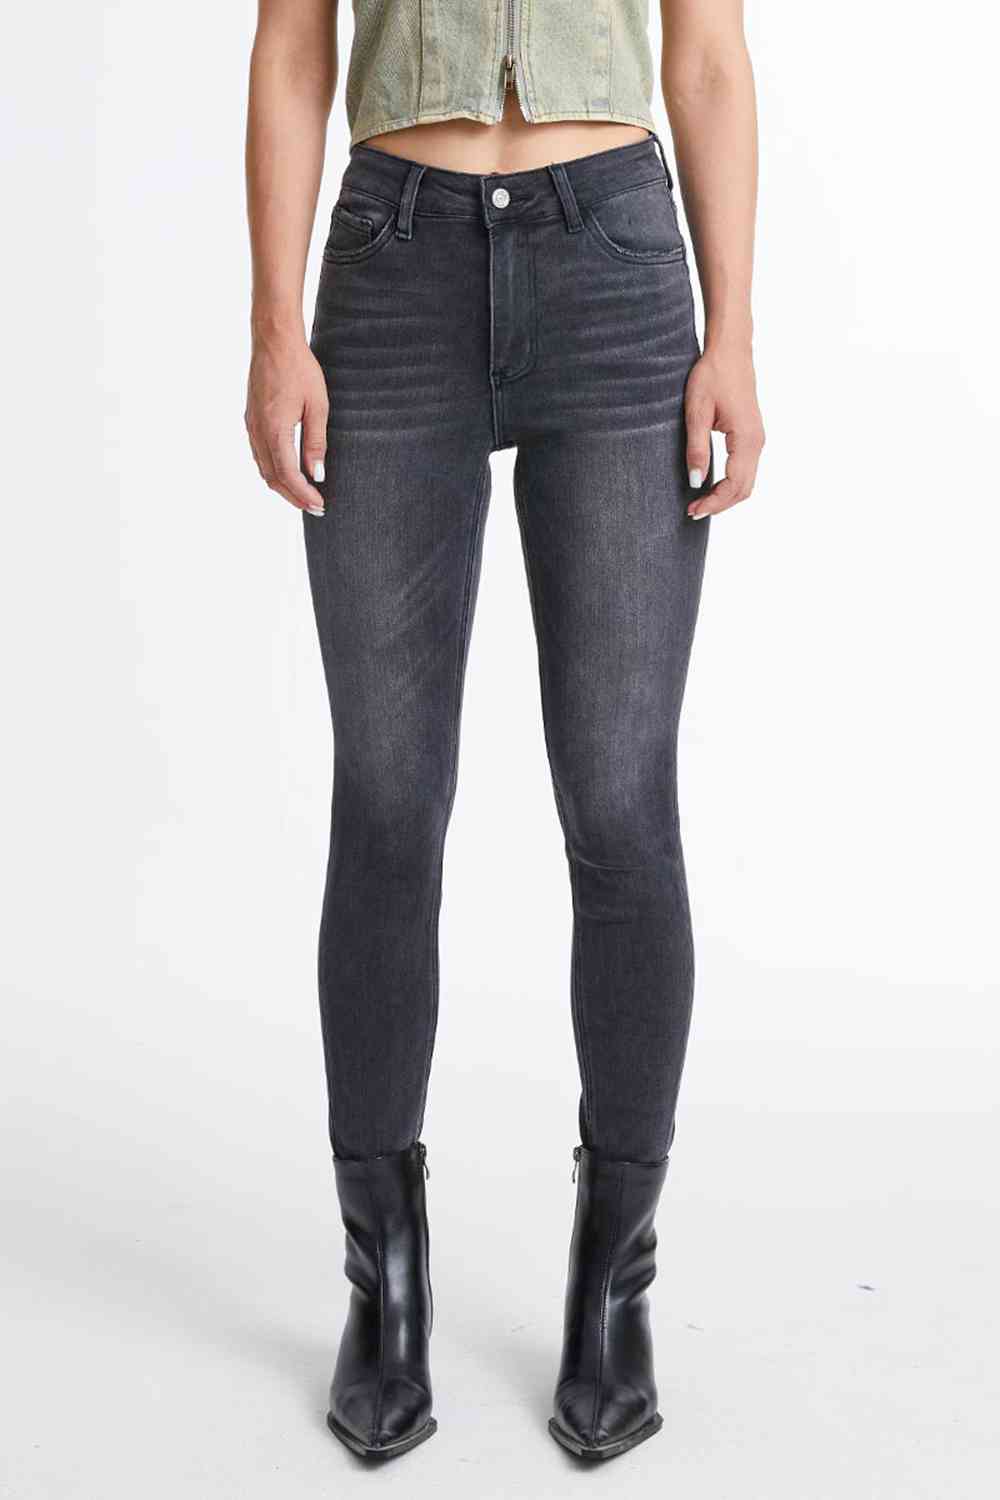 BAYEAS Women's Cropped Skinny Jeans